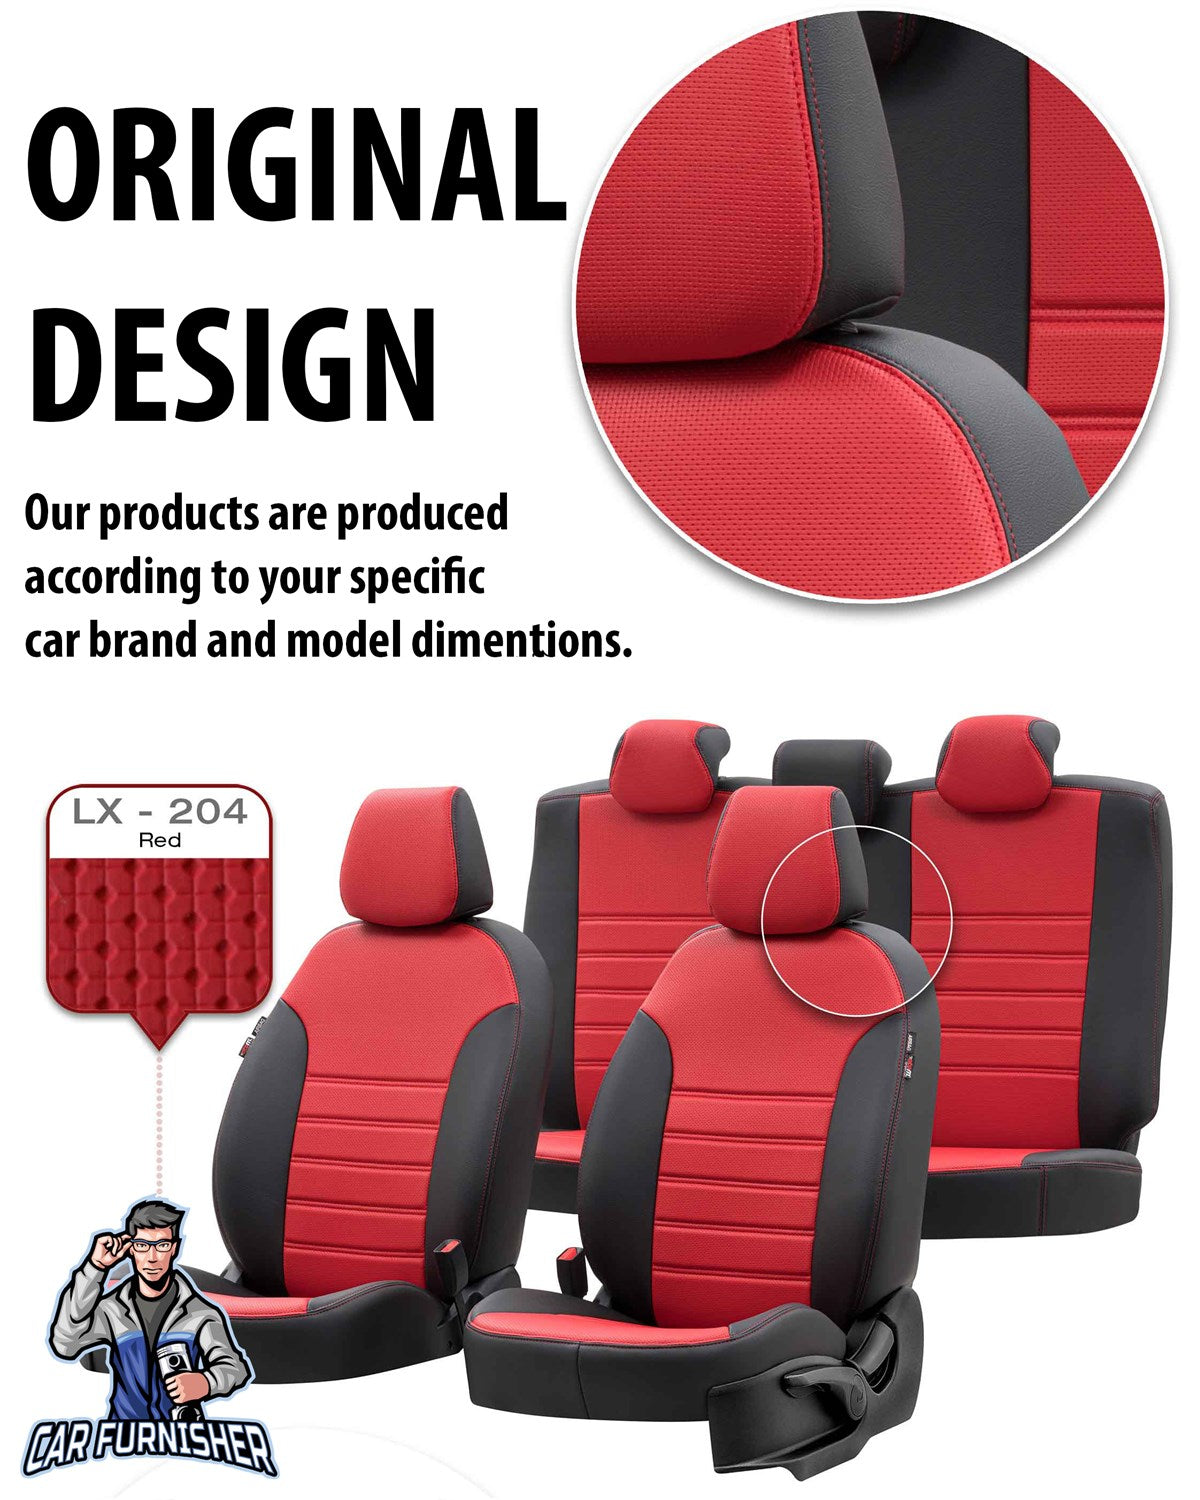 Landrover Freelander Car Seat Covers 1998-2012 New York Design Black Leather